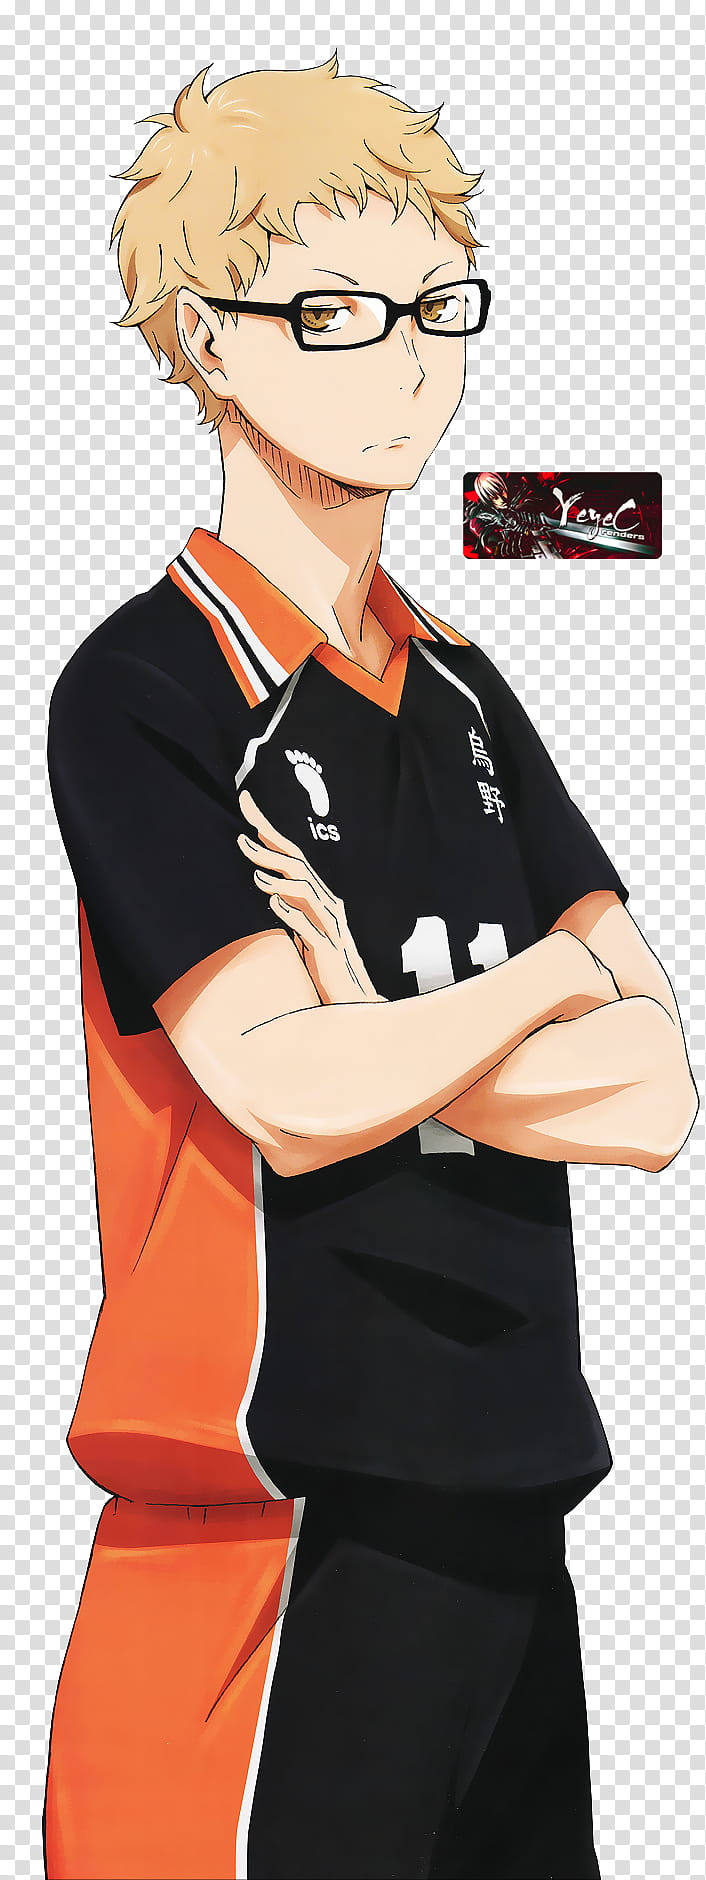 Haikyuu Render Kei Tsukishima, anime character illustration transparent background PNG clipart